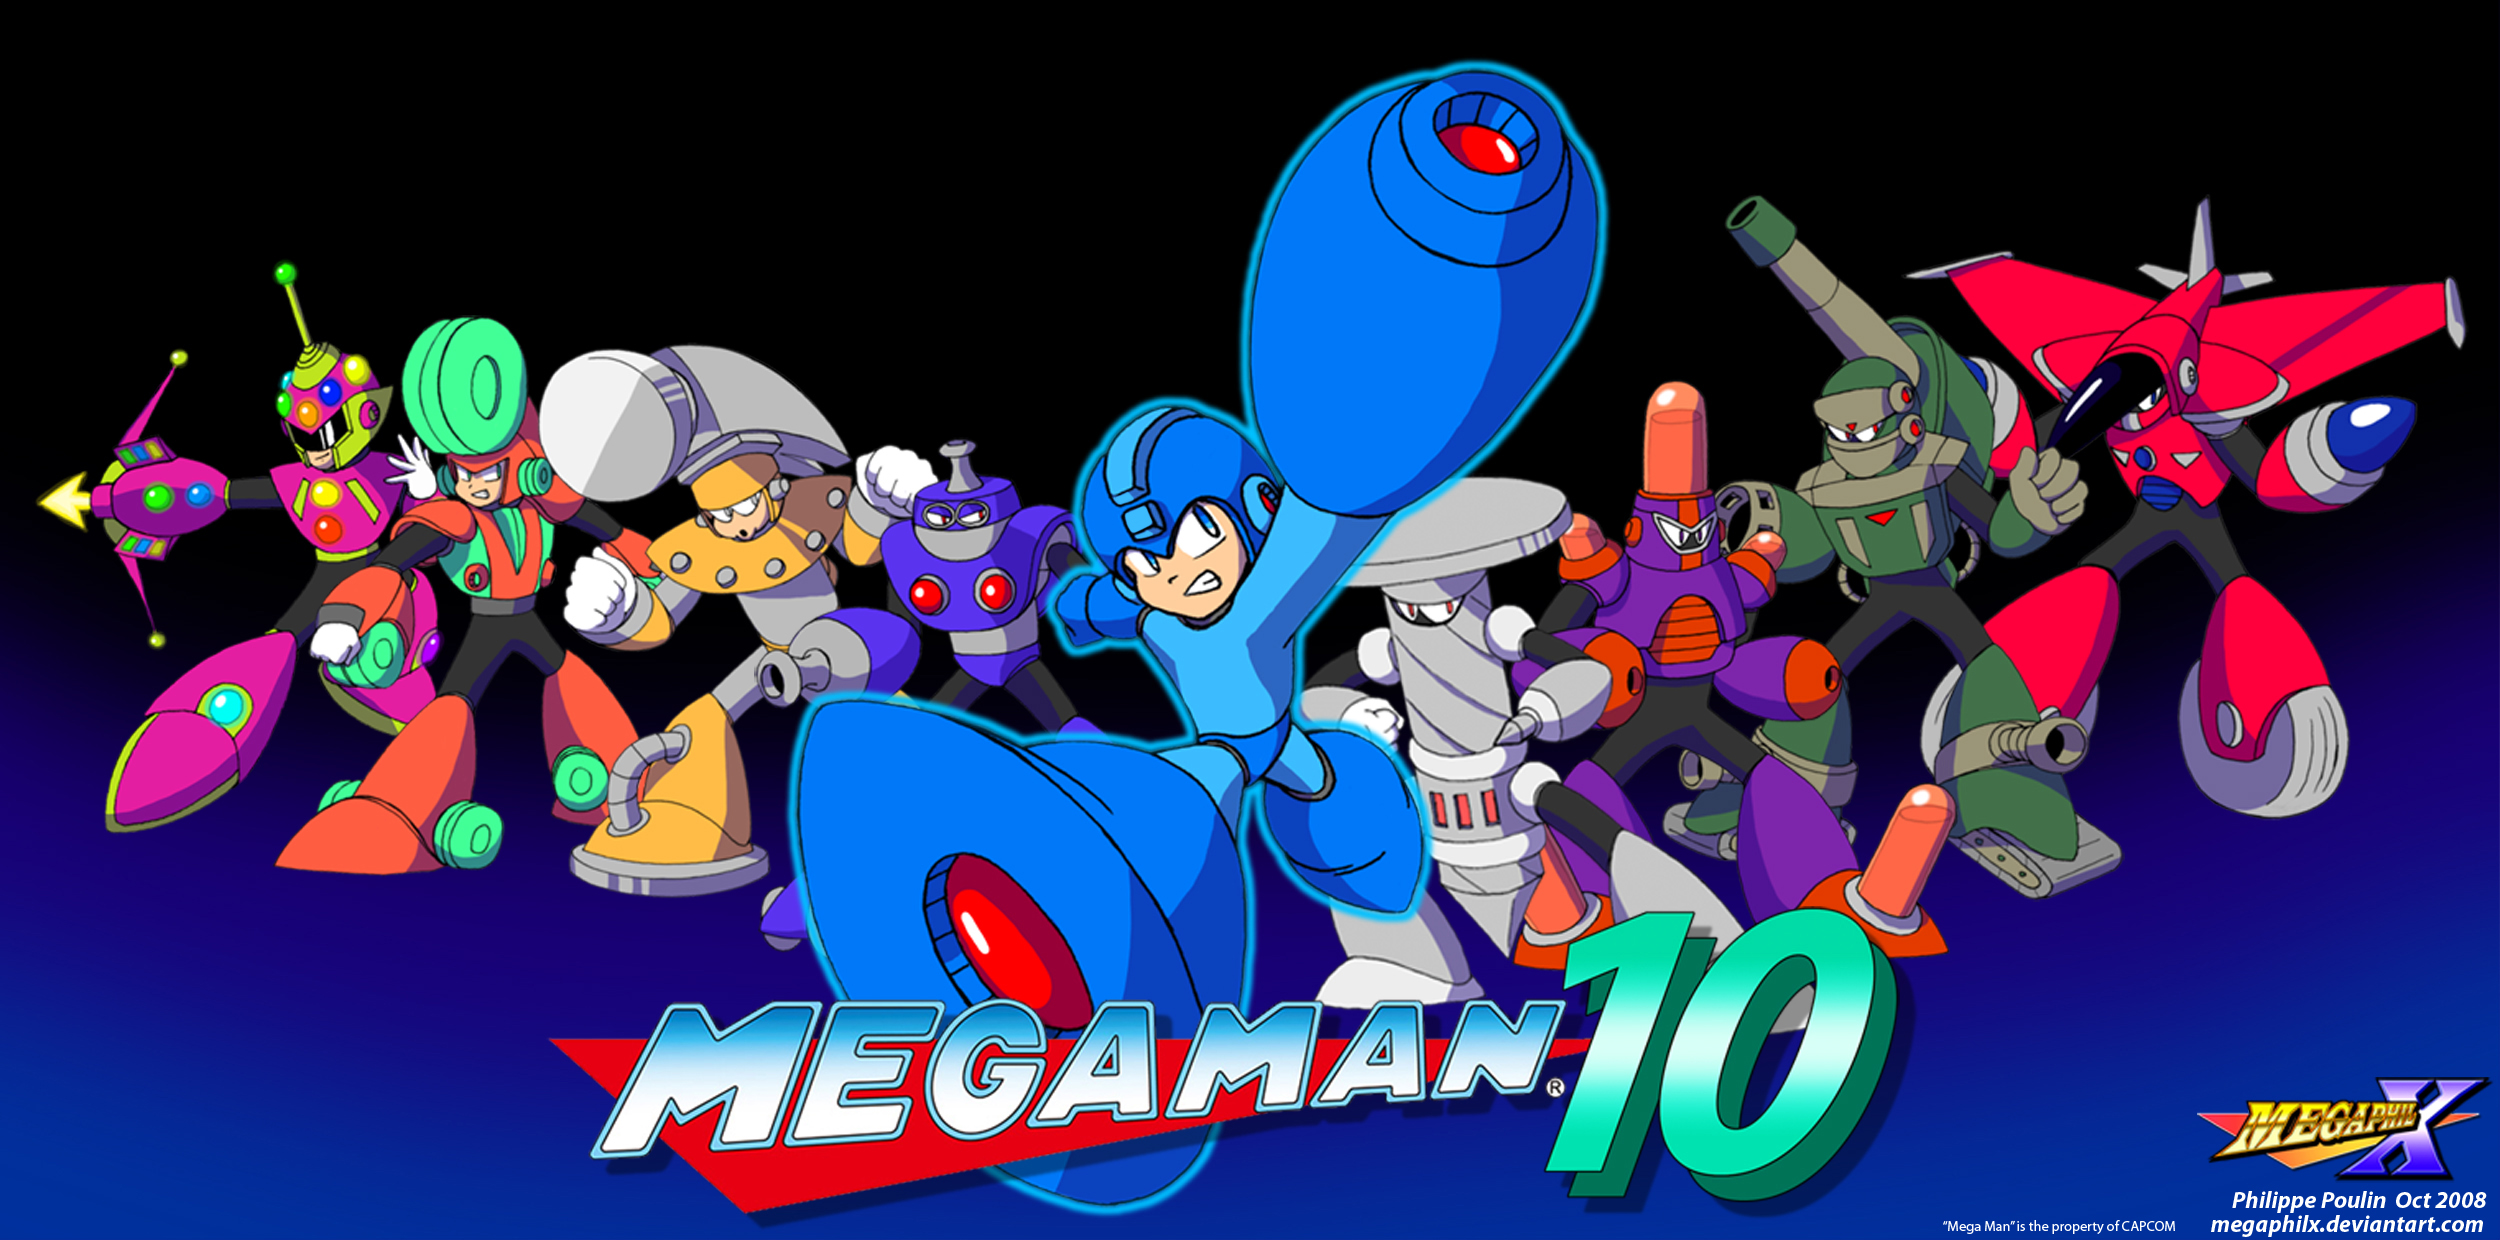 Amazing Mega Man 10 Pictures & Backgrounds